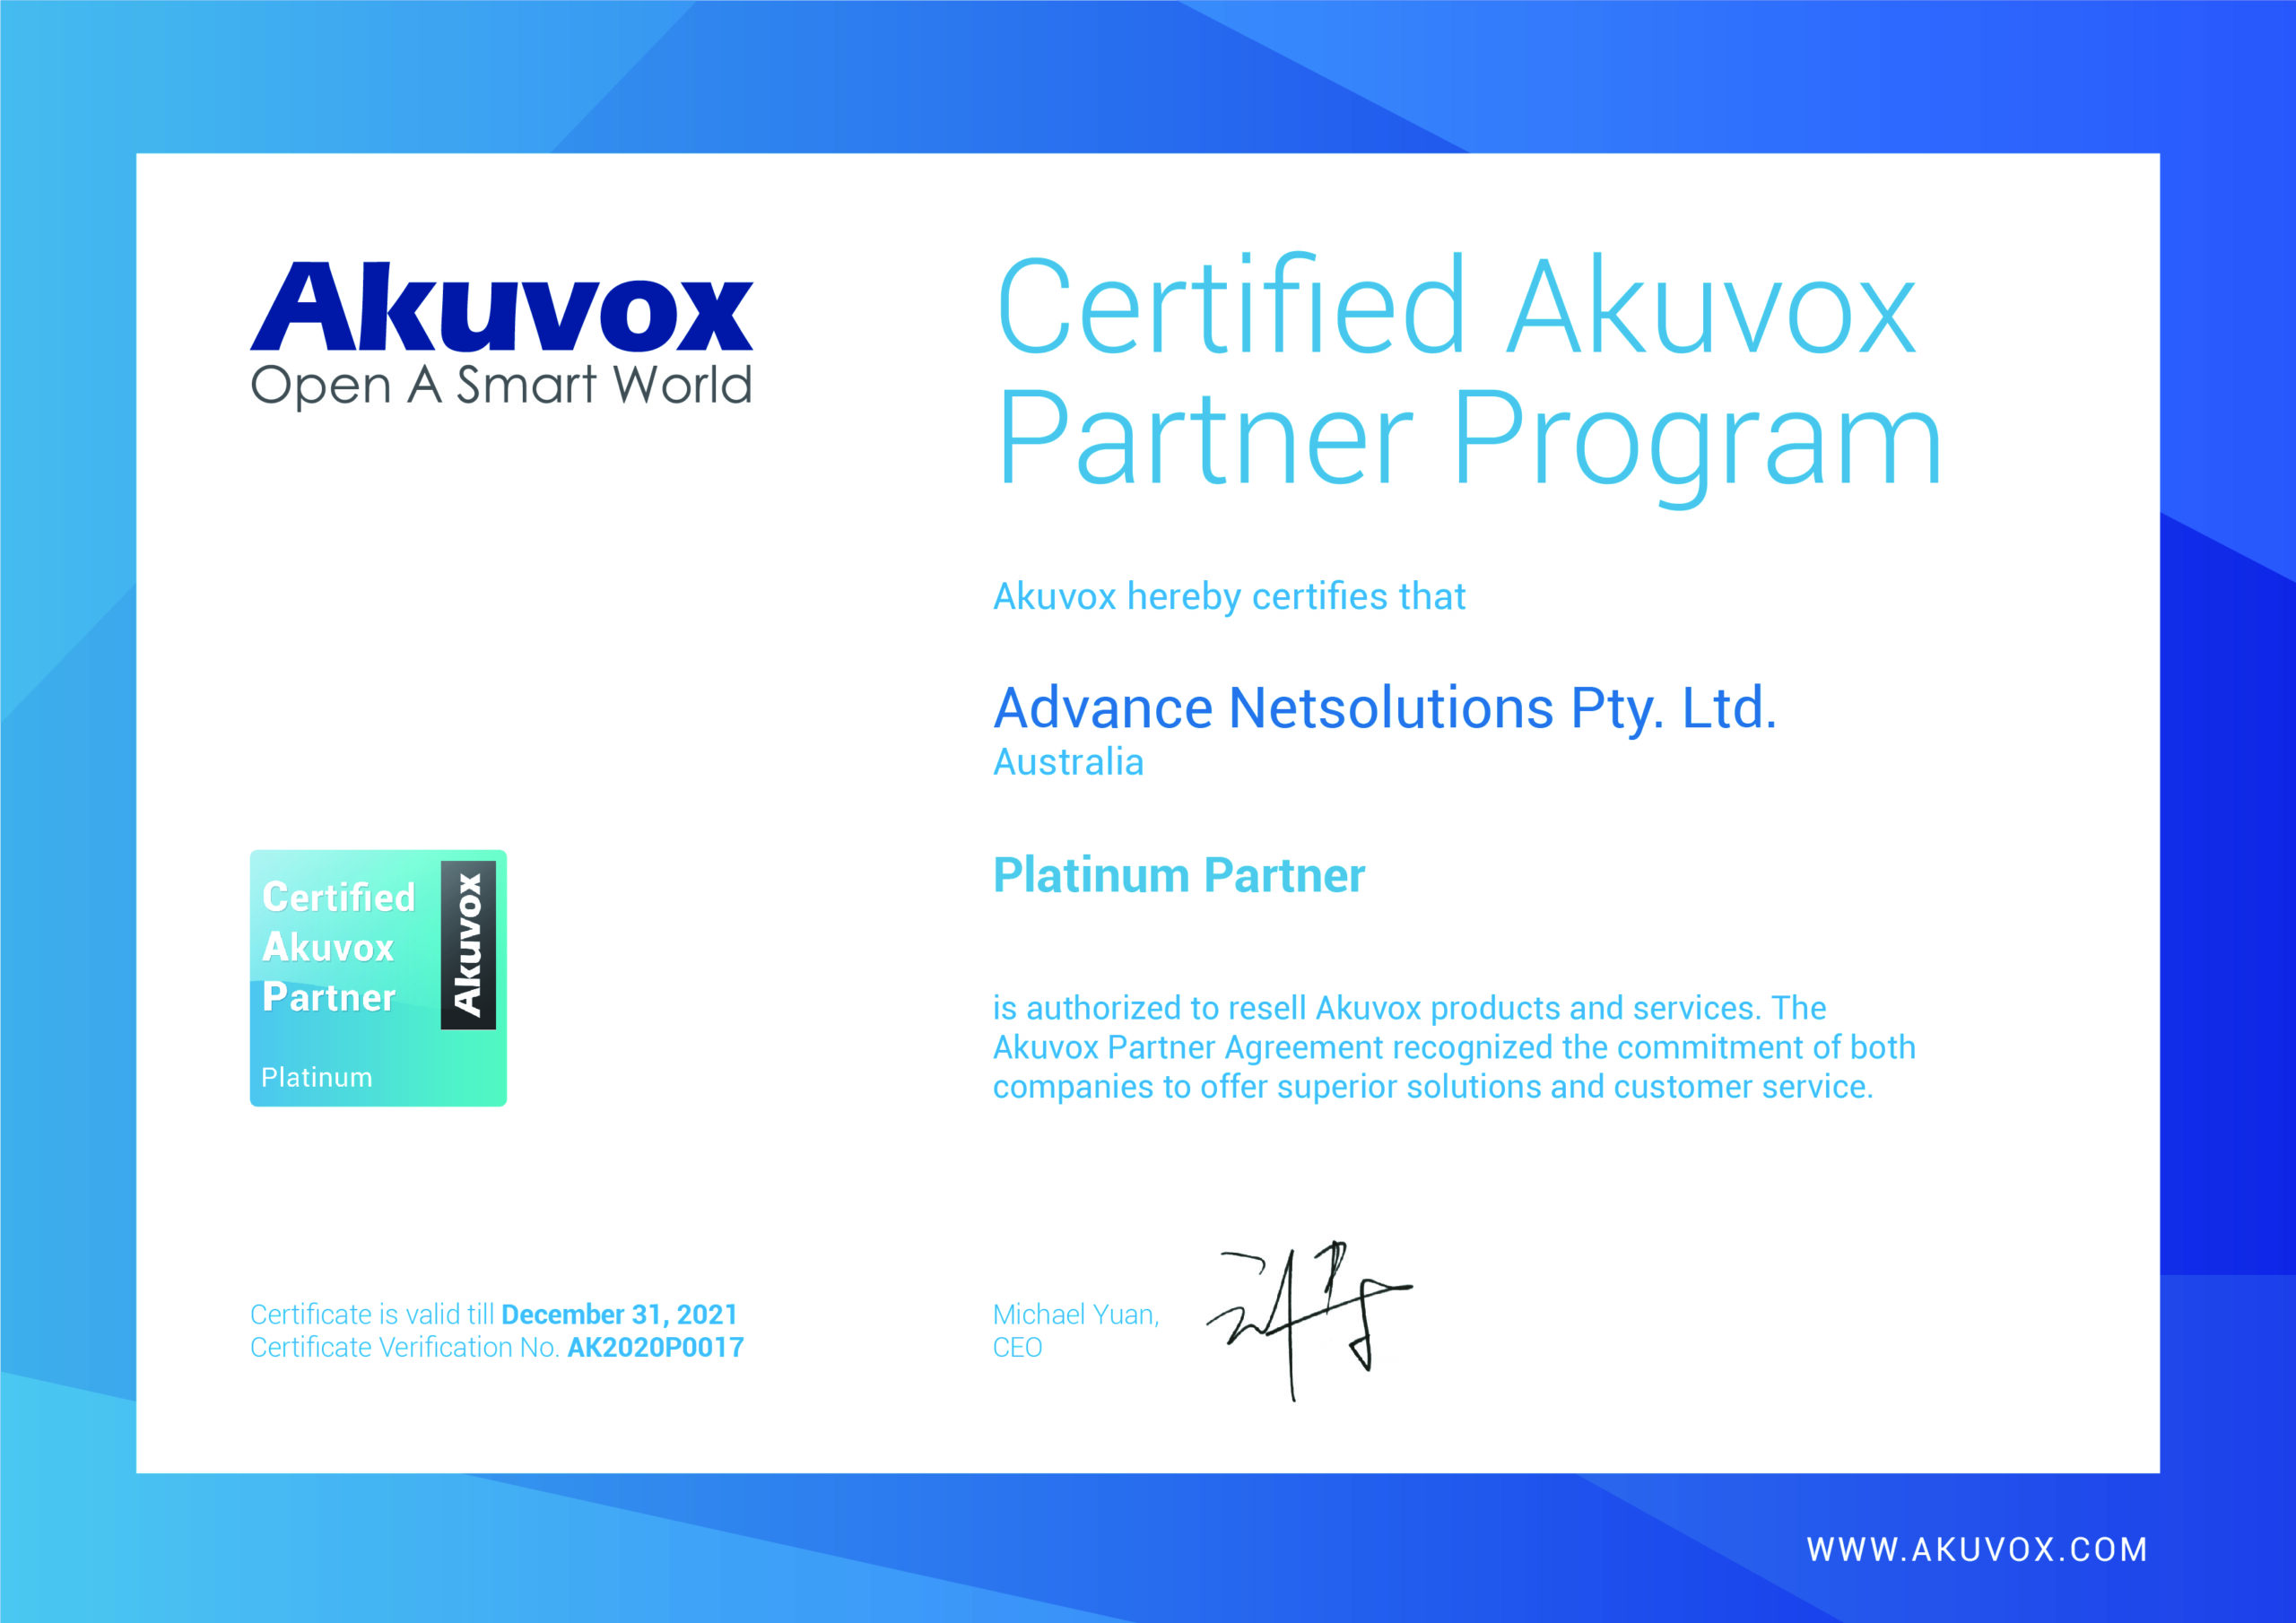 advance-NET - Akuvox Australia Distributor